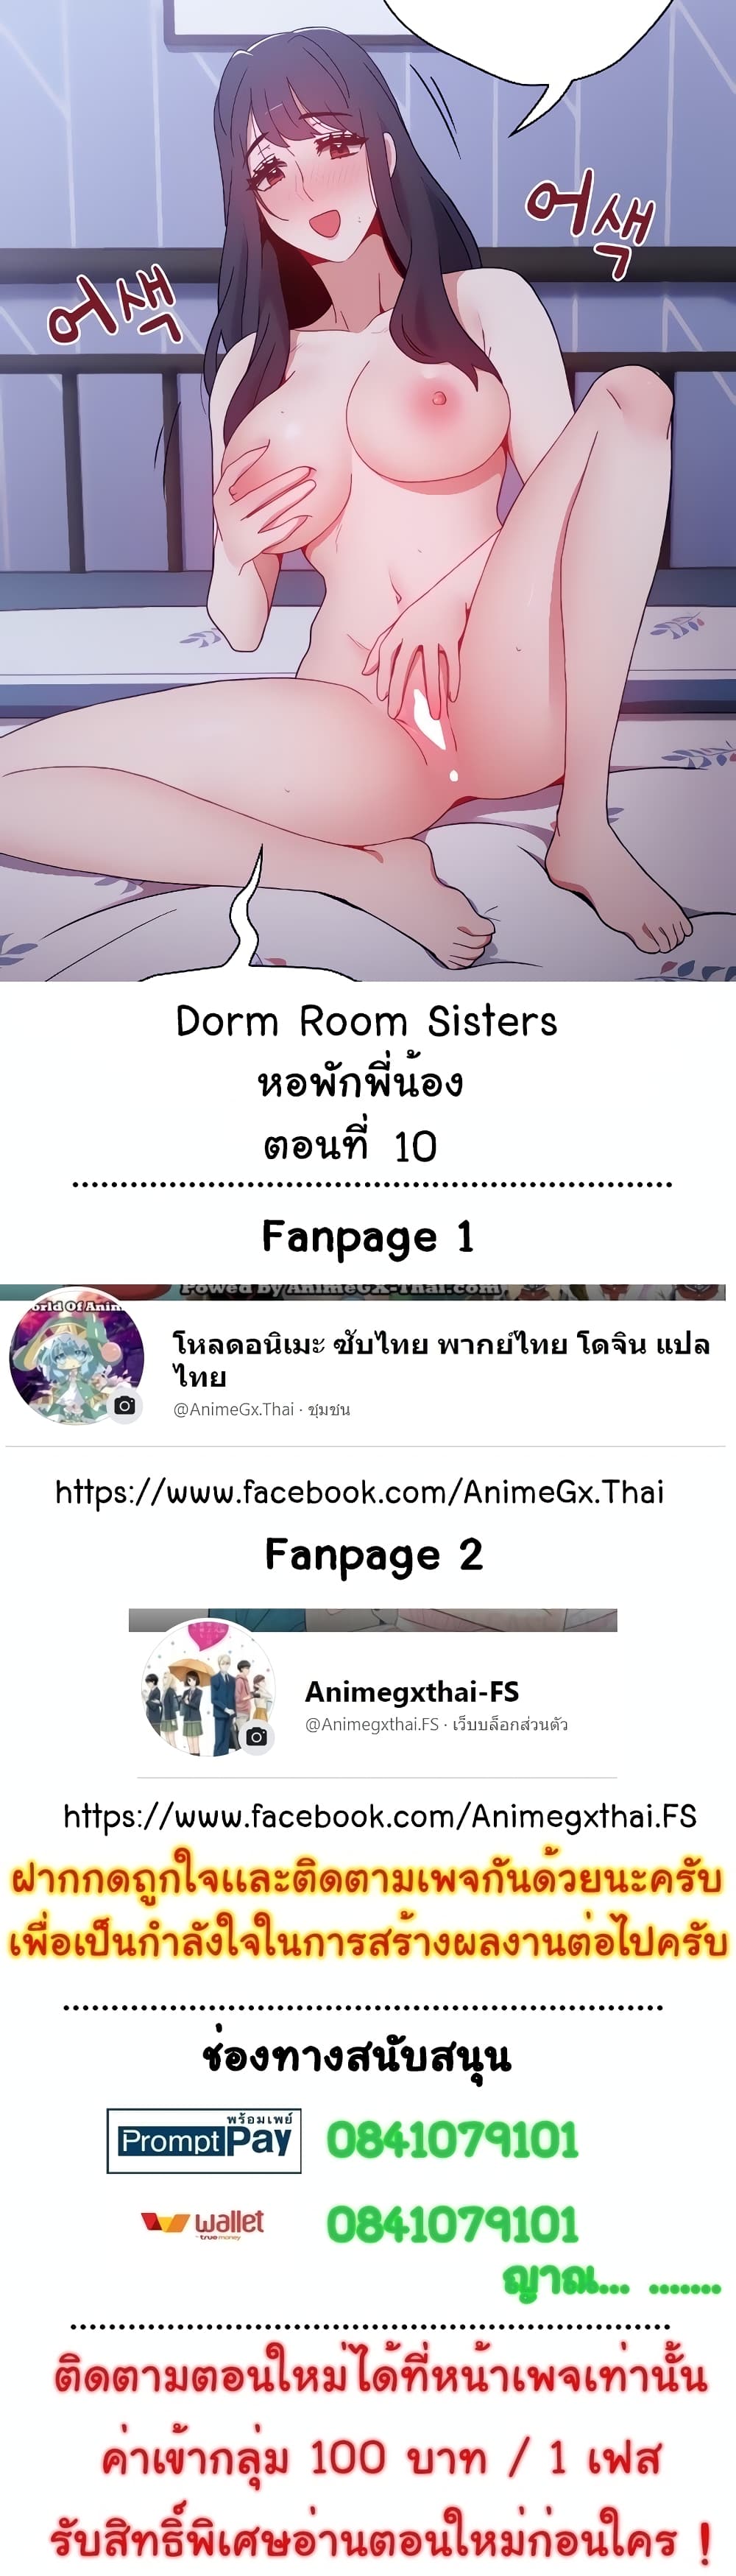 Dorm Room Sisters 10 (1)